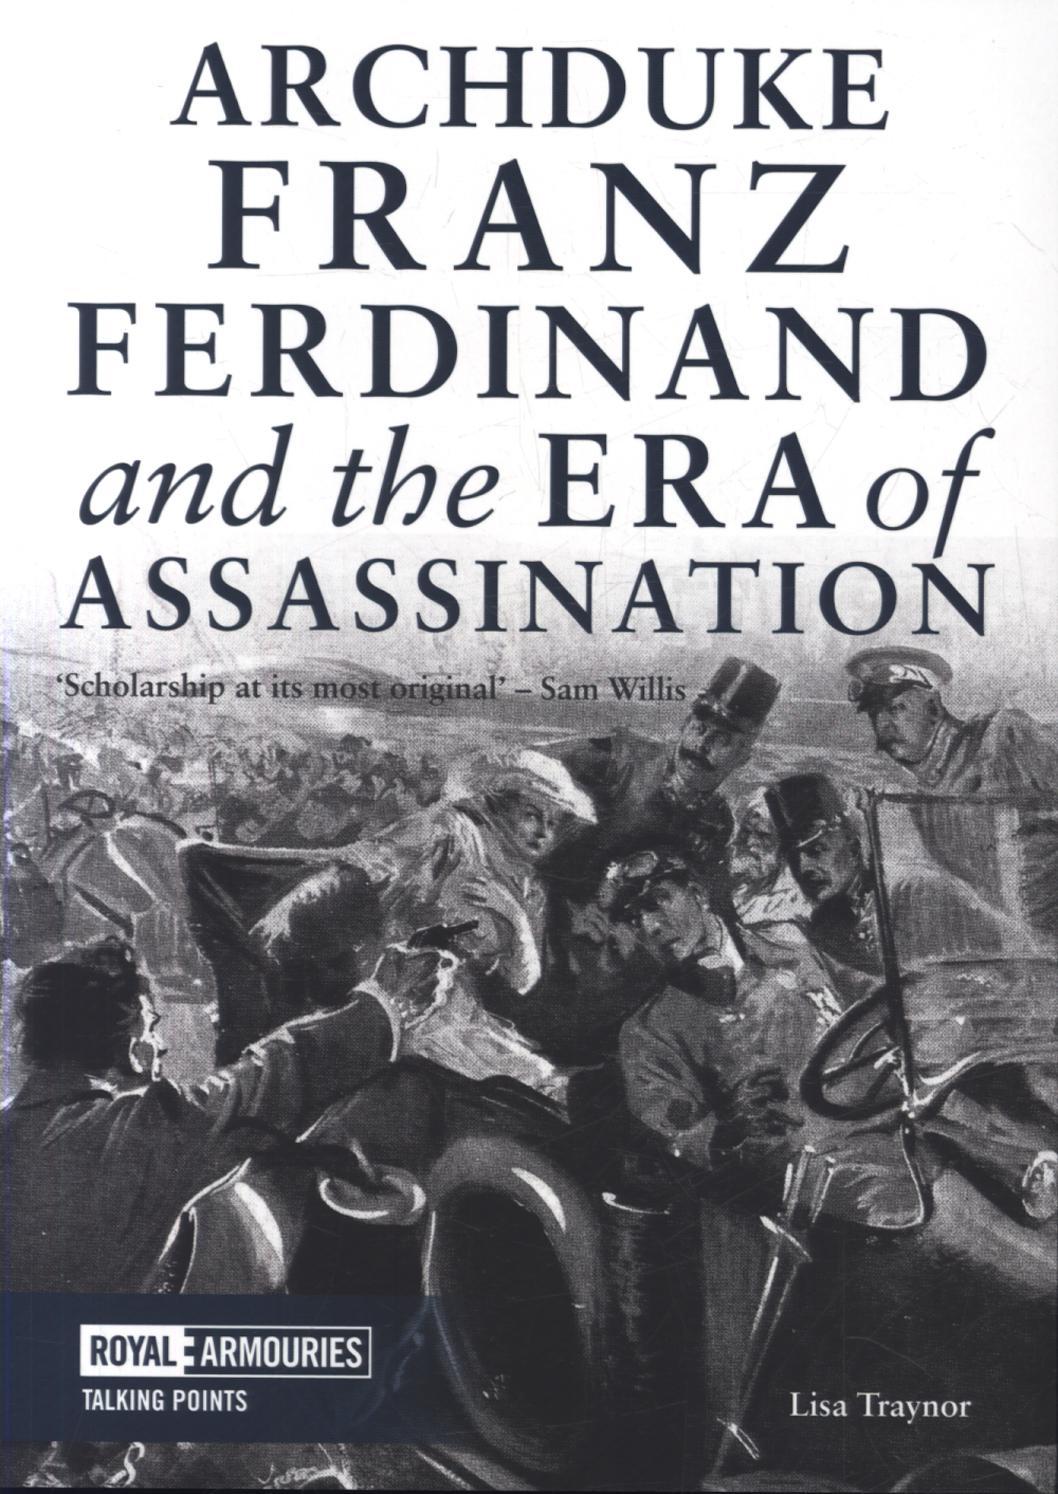 Archduke Franz Ferdinand and the Era of Assassination